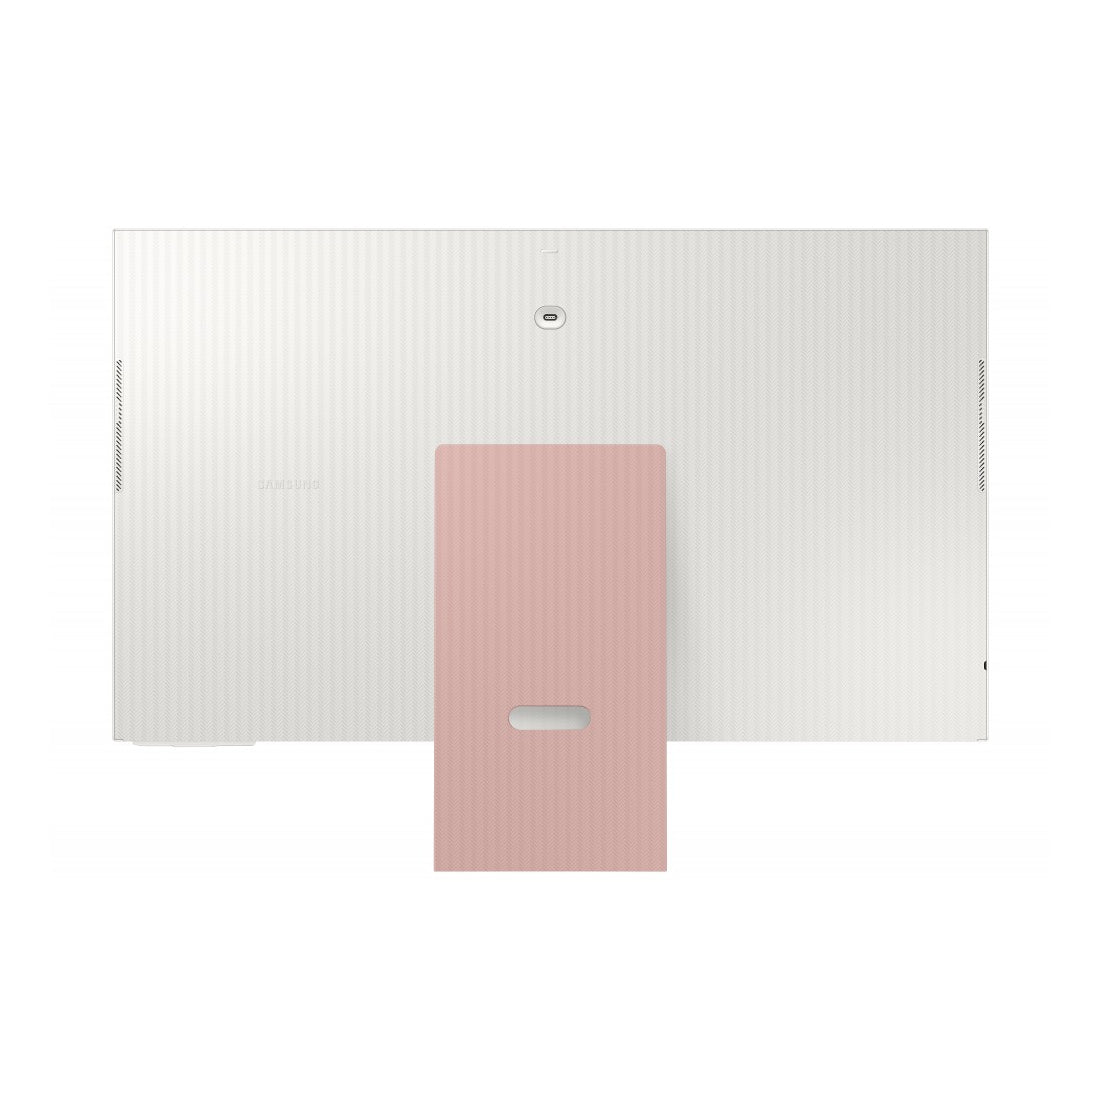 Samsung M8 32'' 60Hz UHD Flat Smart Monitor - Sunset Pink - شاشة - Store 974 | ستور ٩٧٤